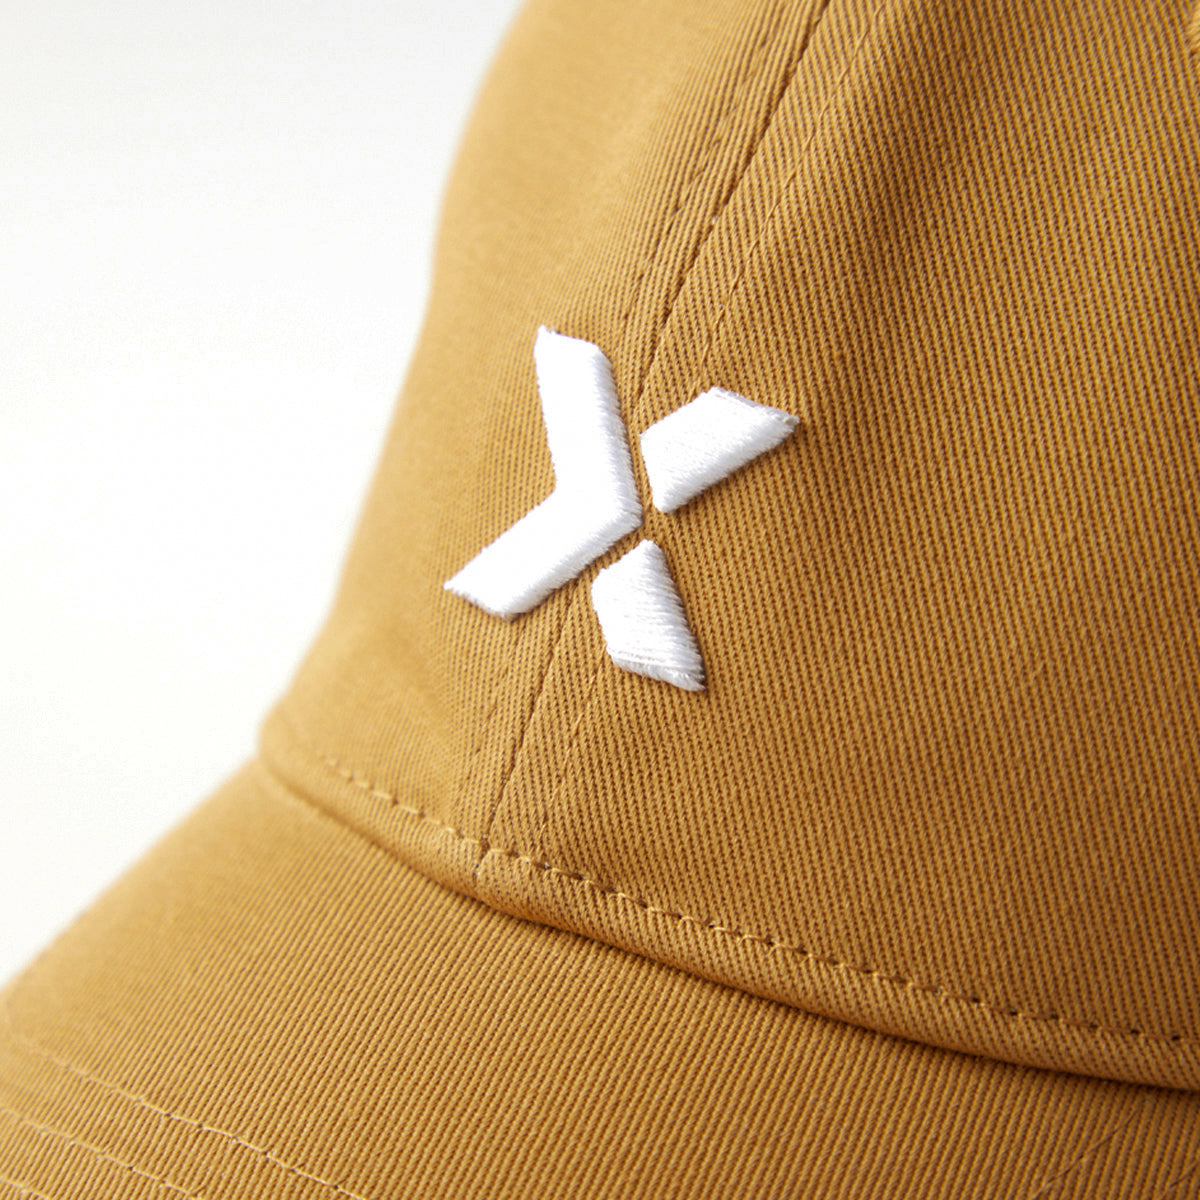 NXT Embroidery Baseball Cap